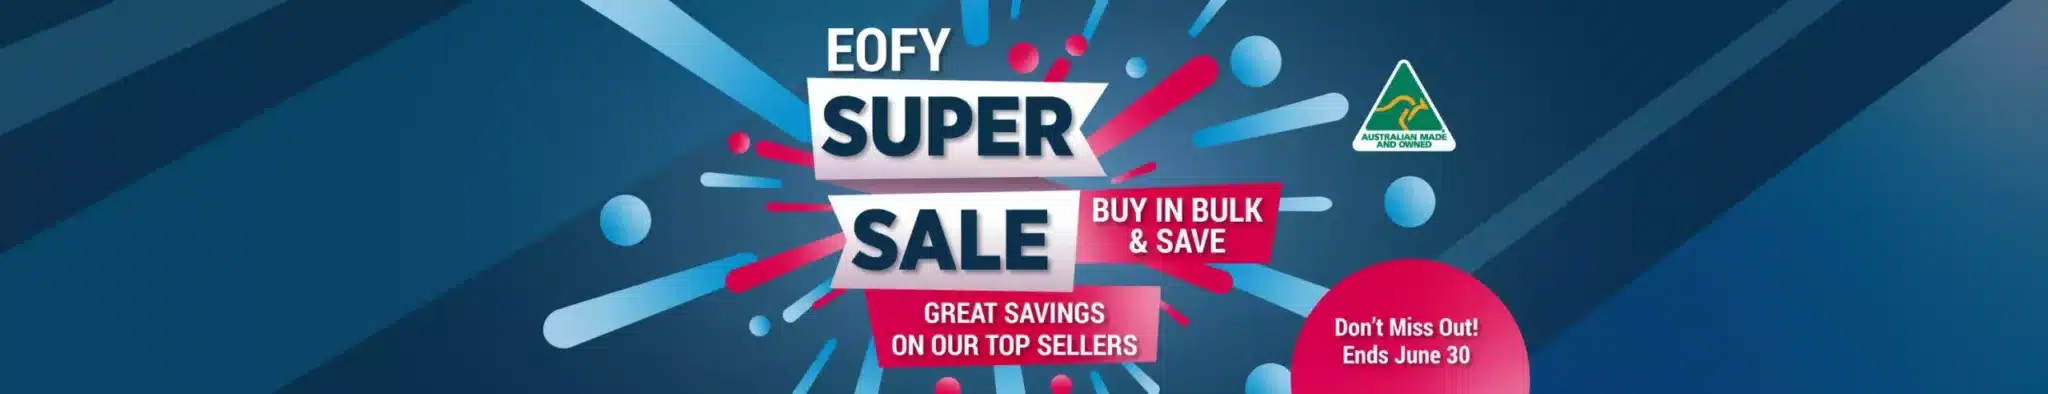 Felton Super Sale EOFY